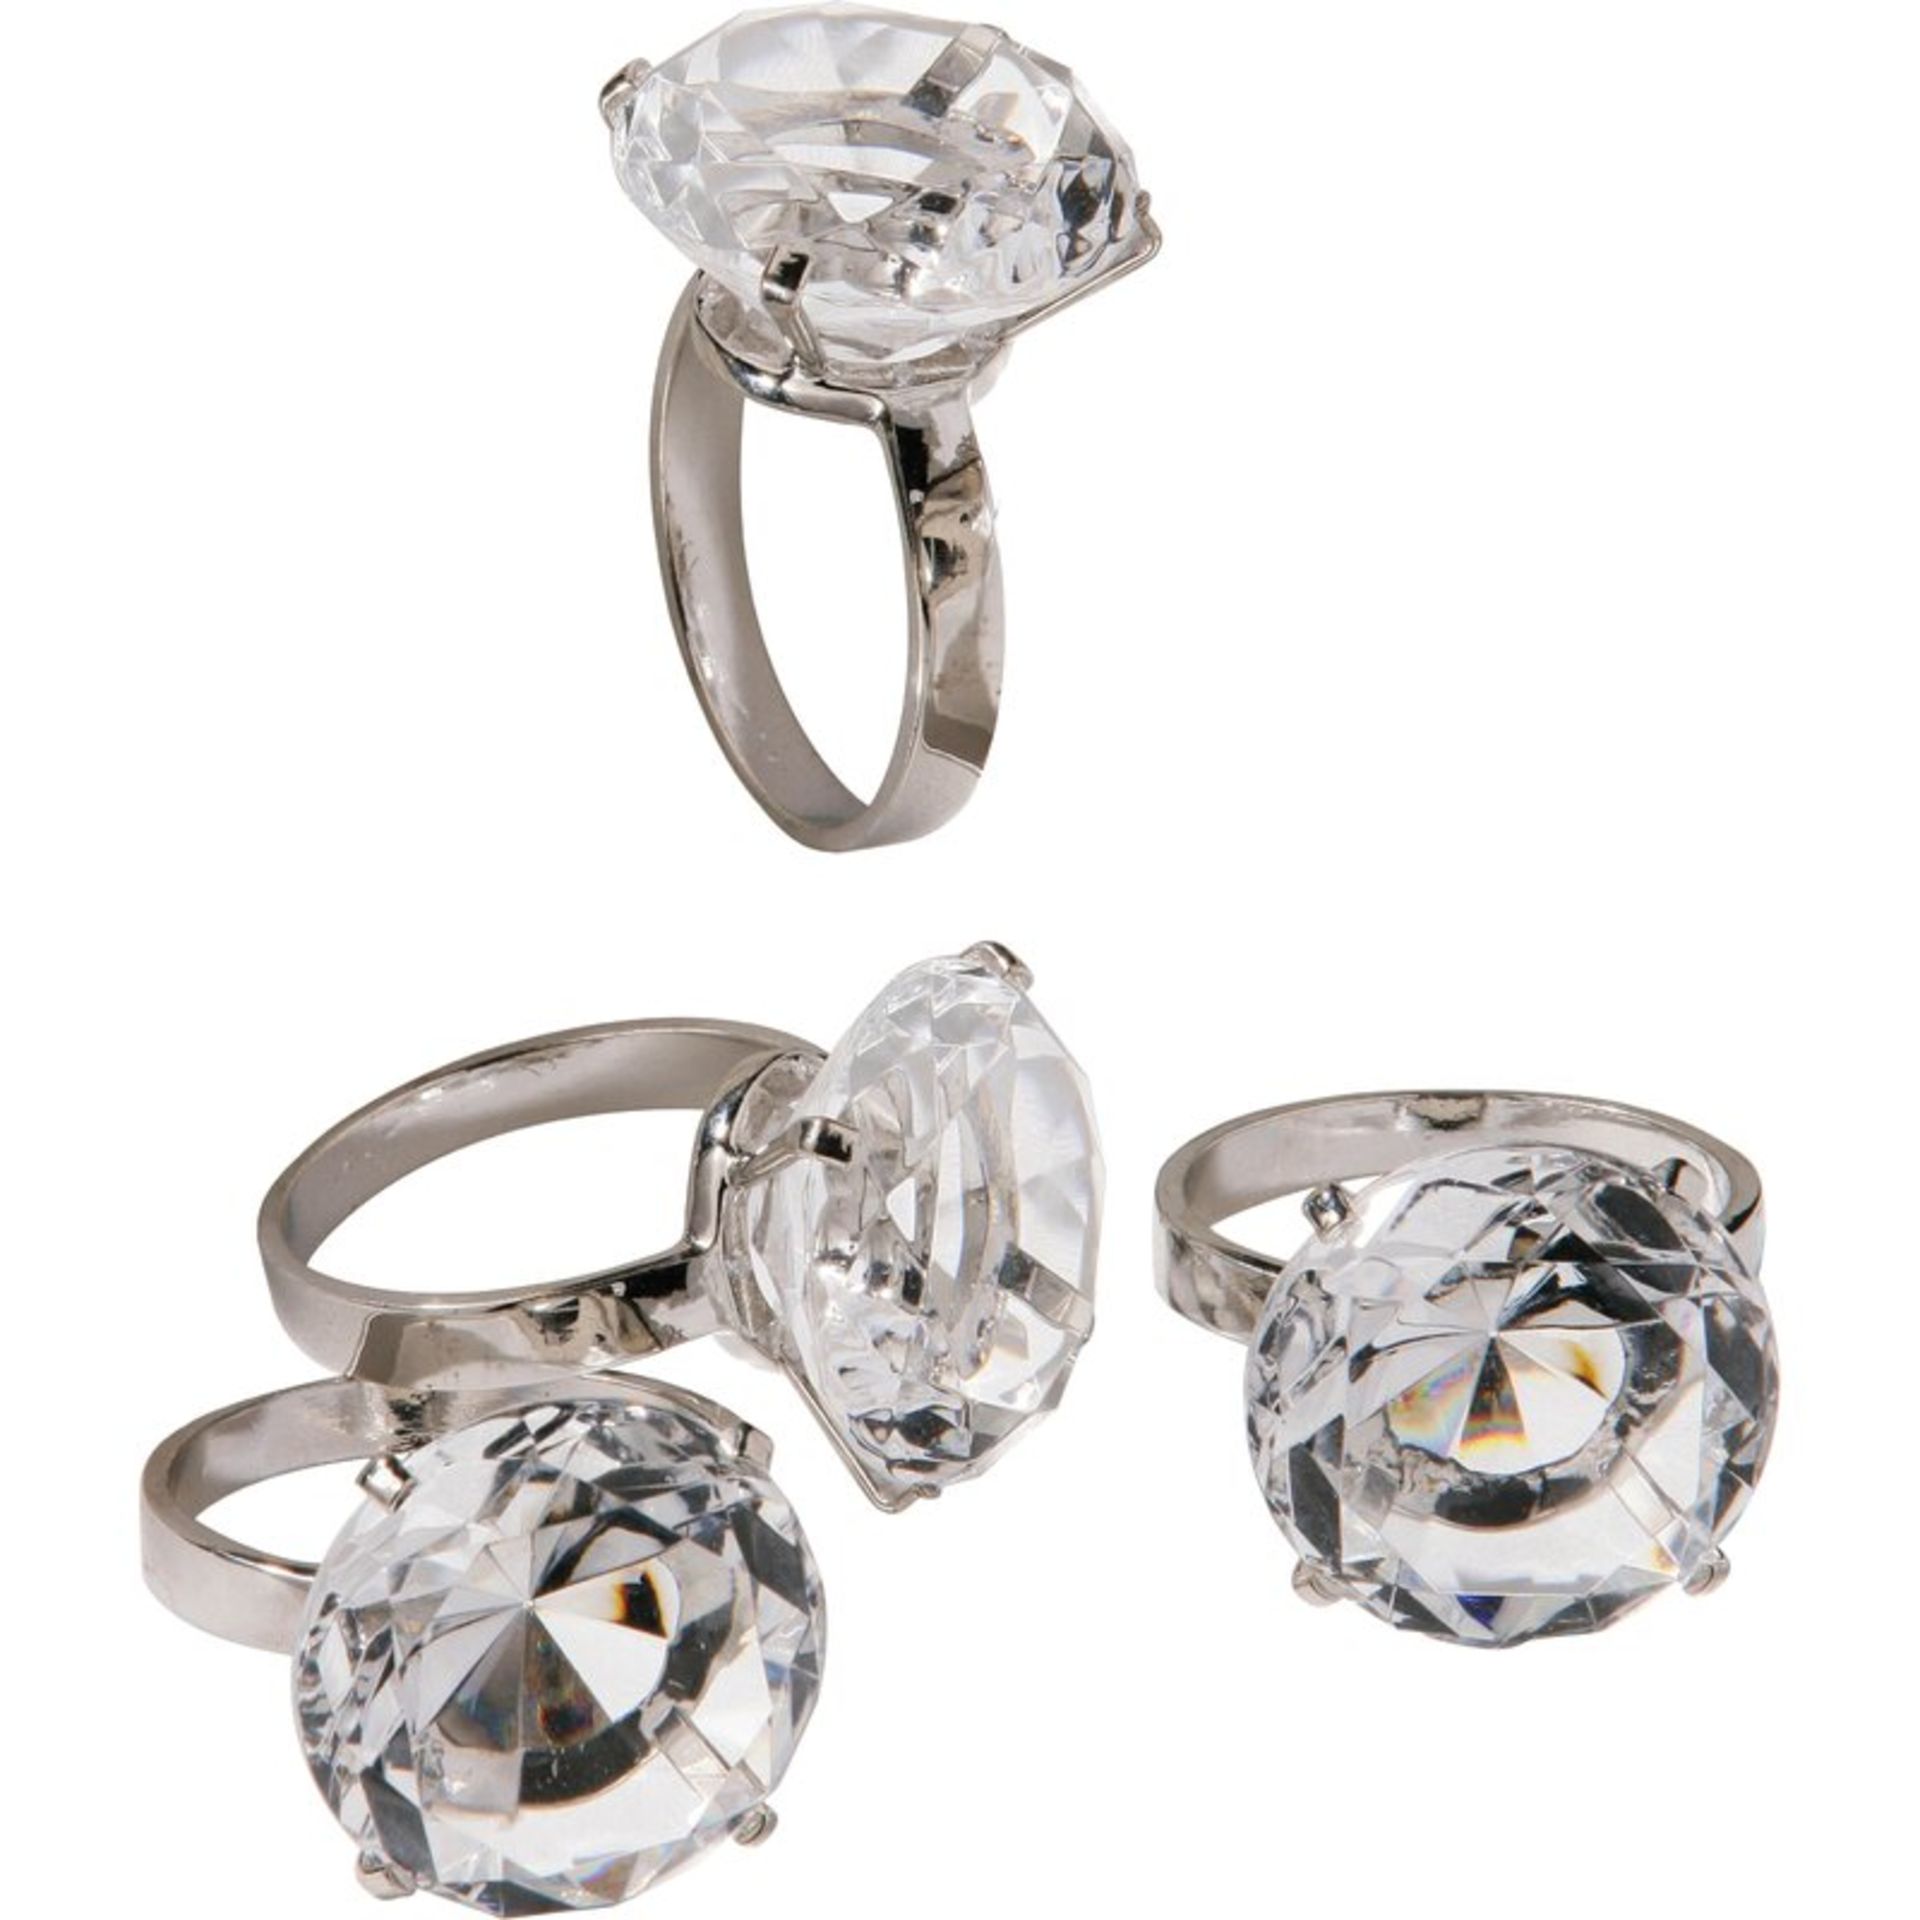 2 x sets of 4 Diamante Napkin Rings by Premier Housewares